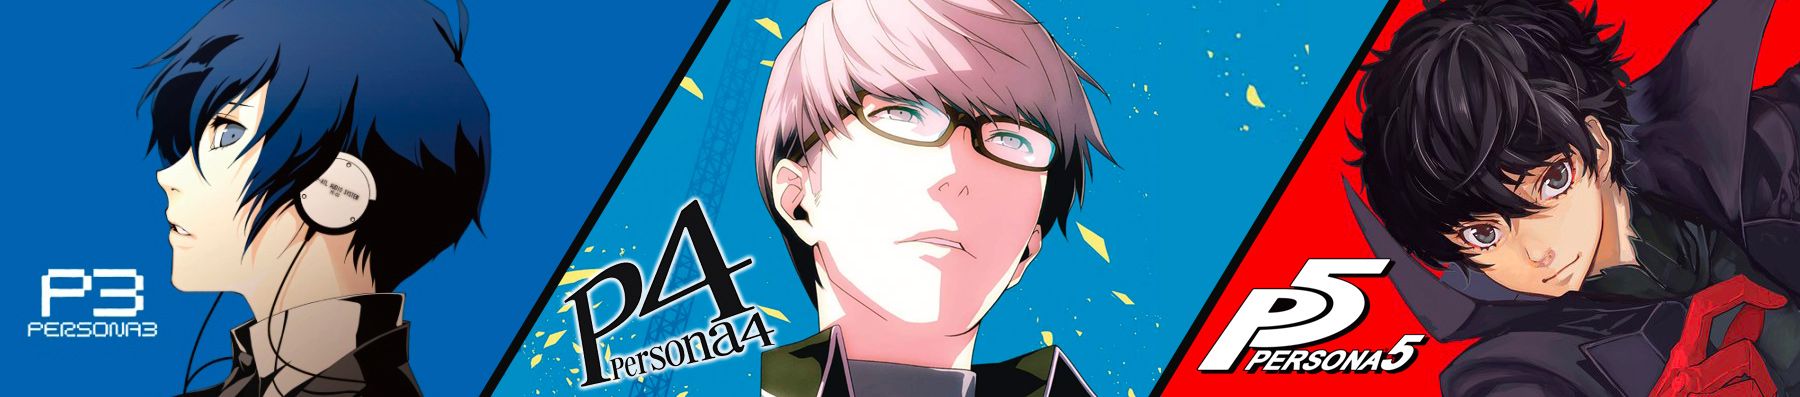 Dossier - Persona - Les adaptations manga et anime